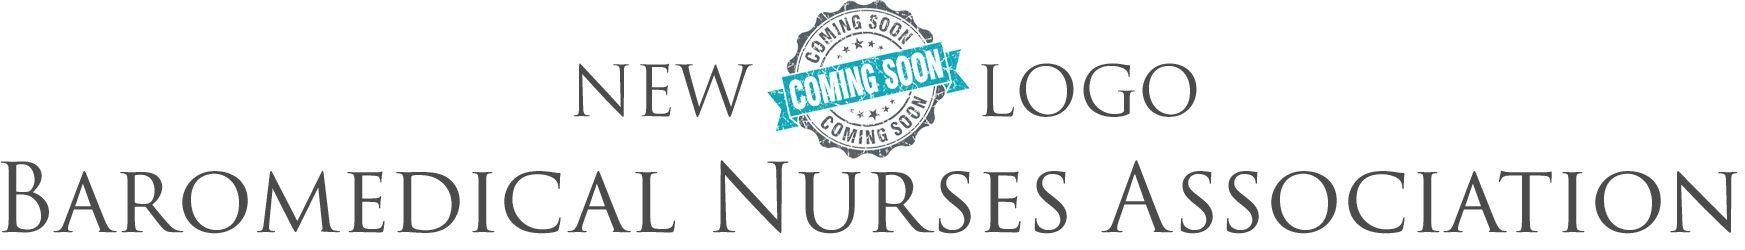 BNA Logo - Baromedical Nurses Association The BNA is looking for a new logo!